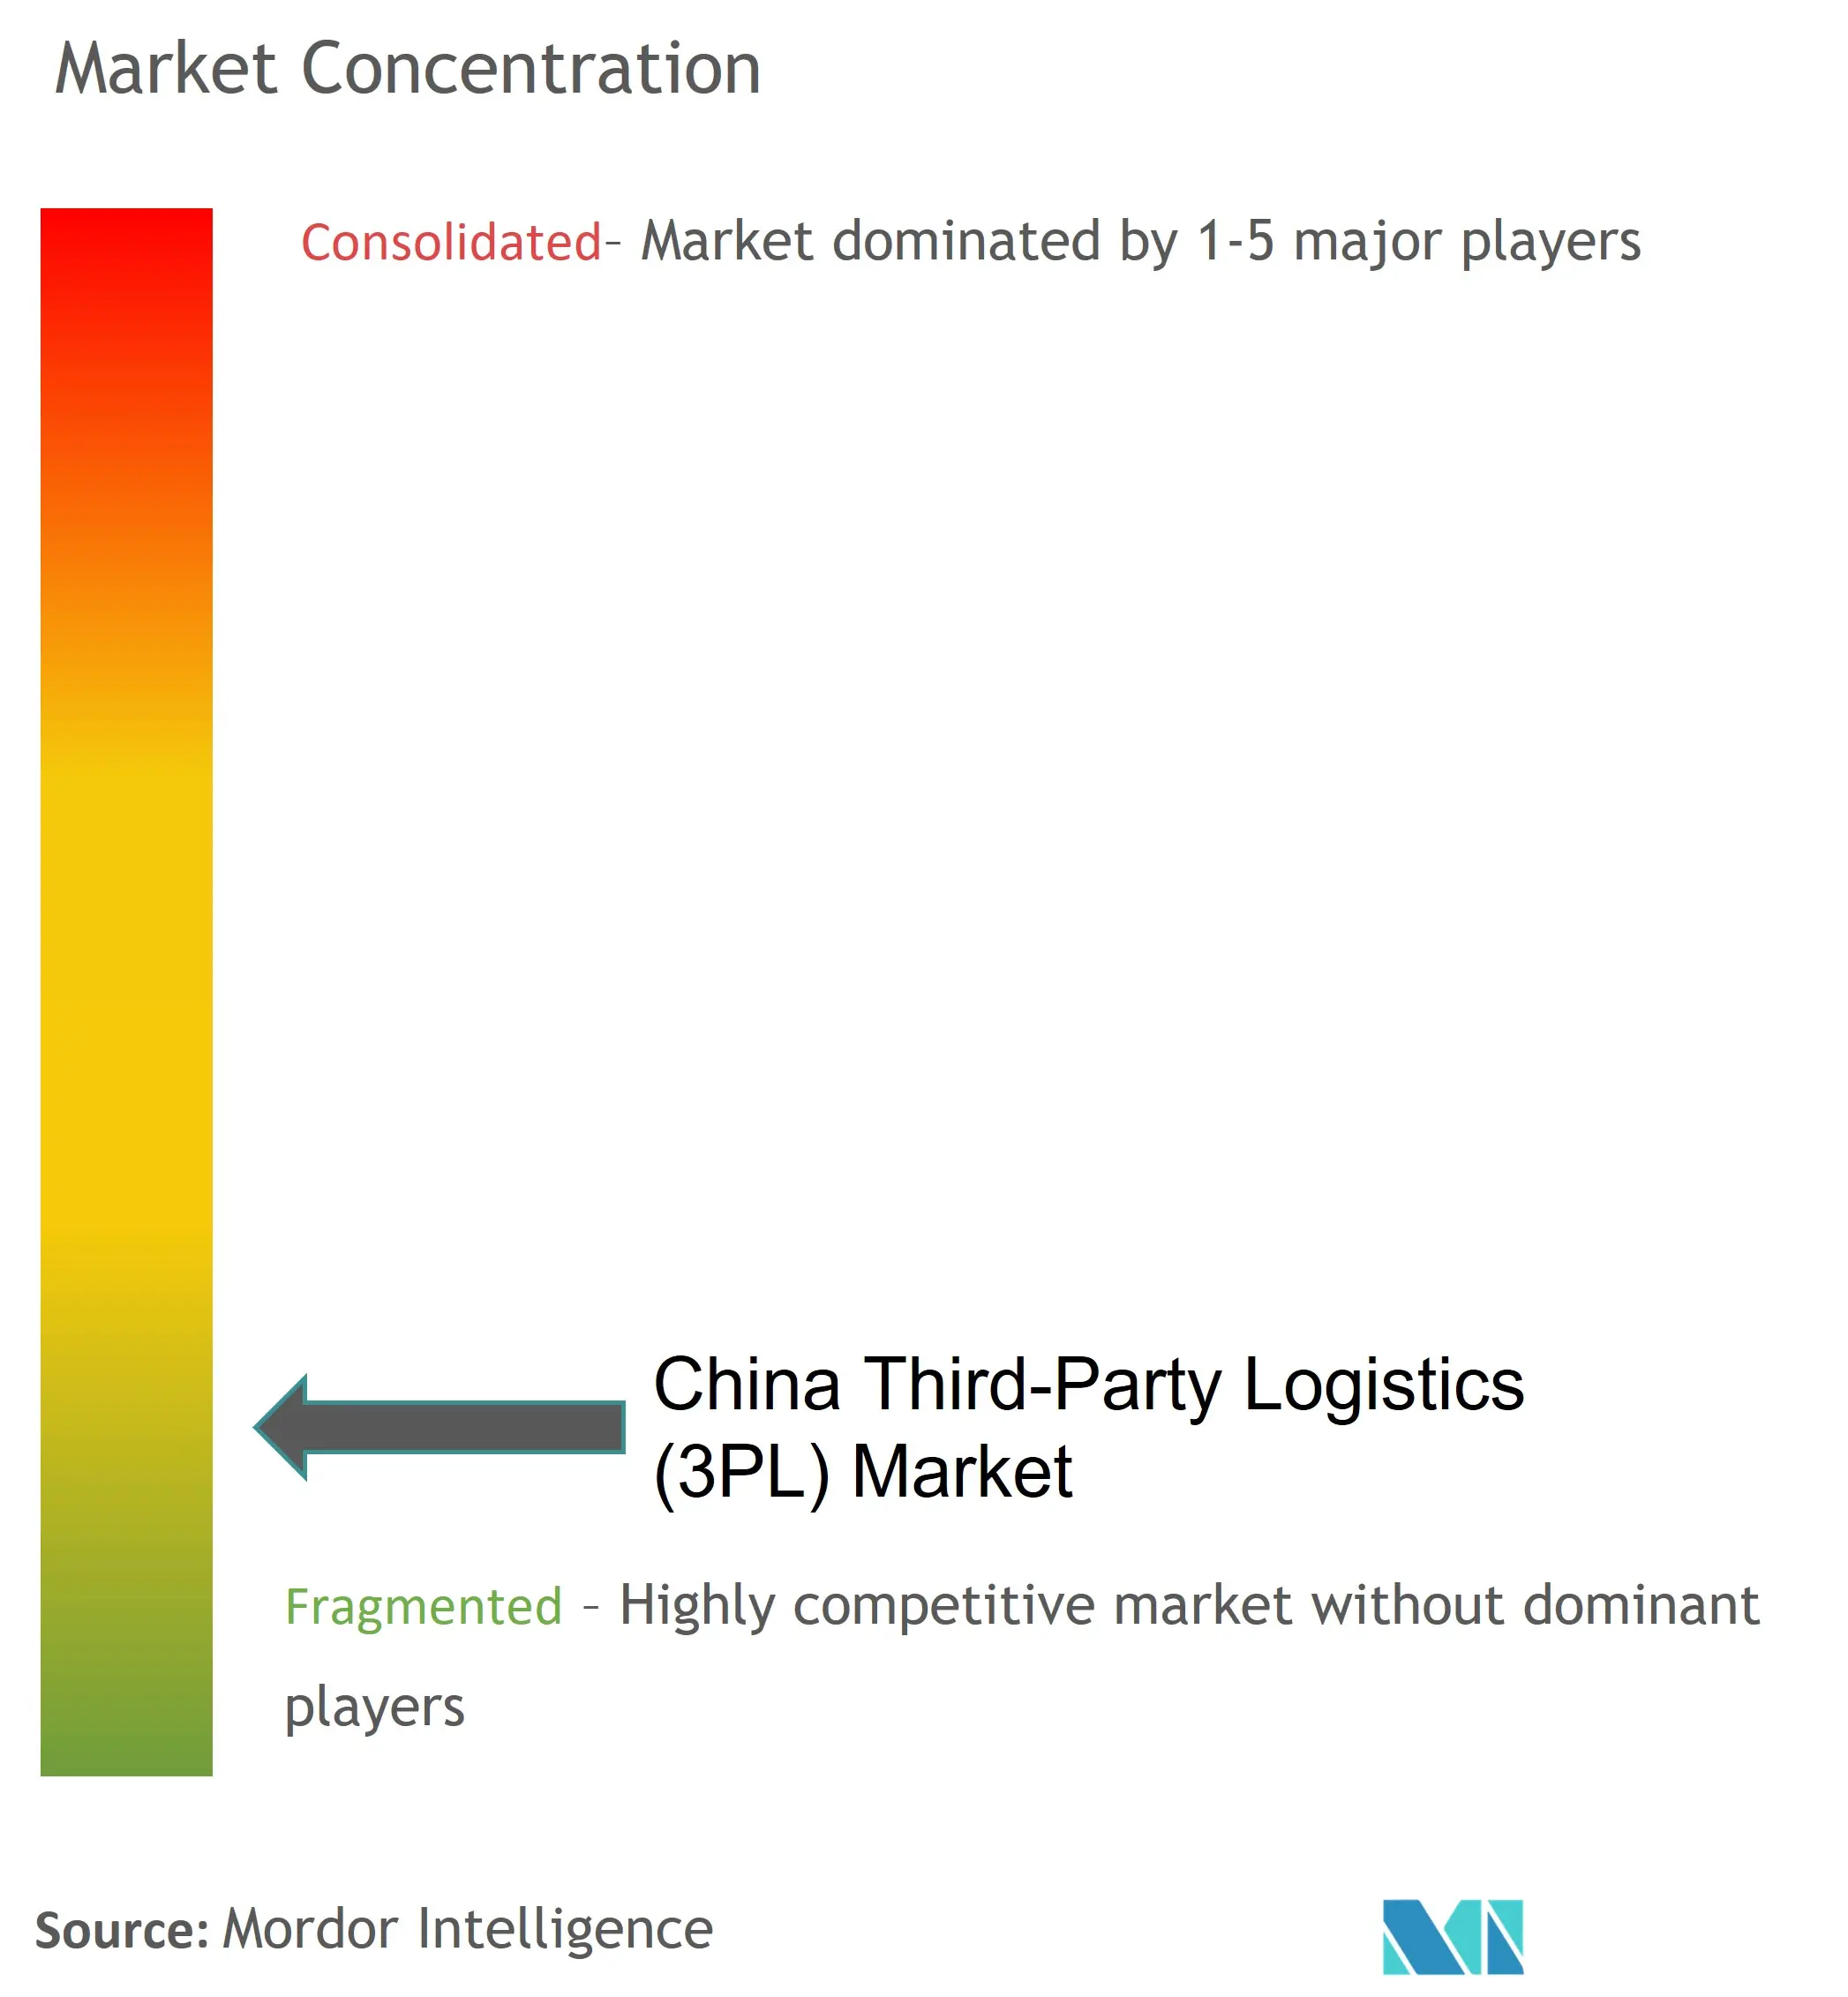 China Third-Party Logistics (3PL) Market Concentration